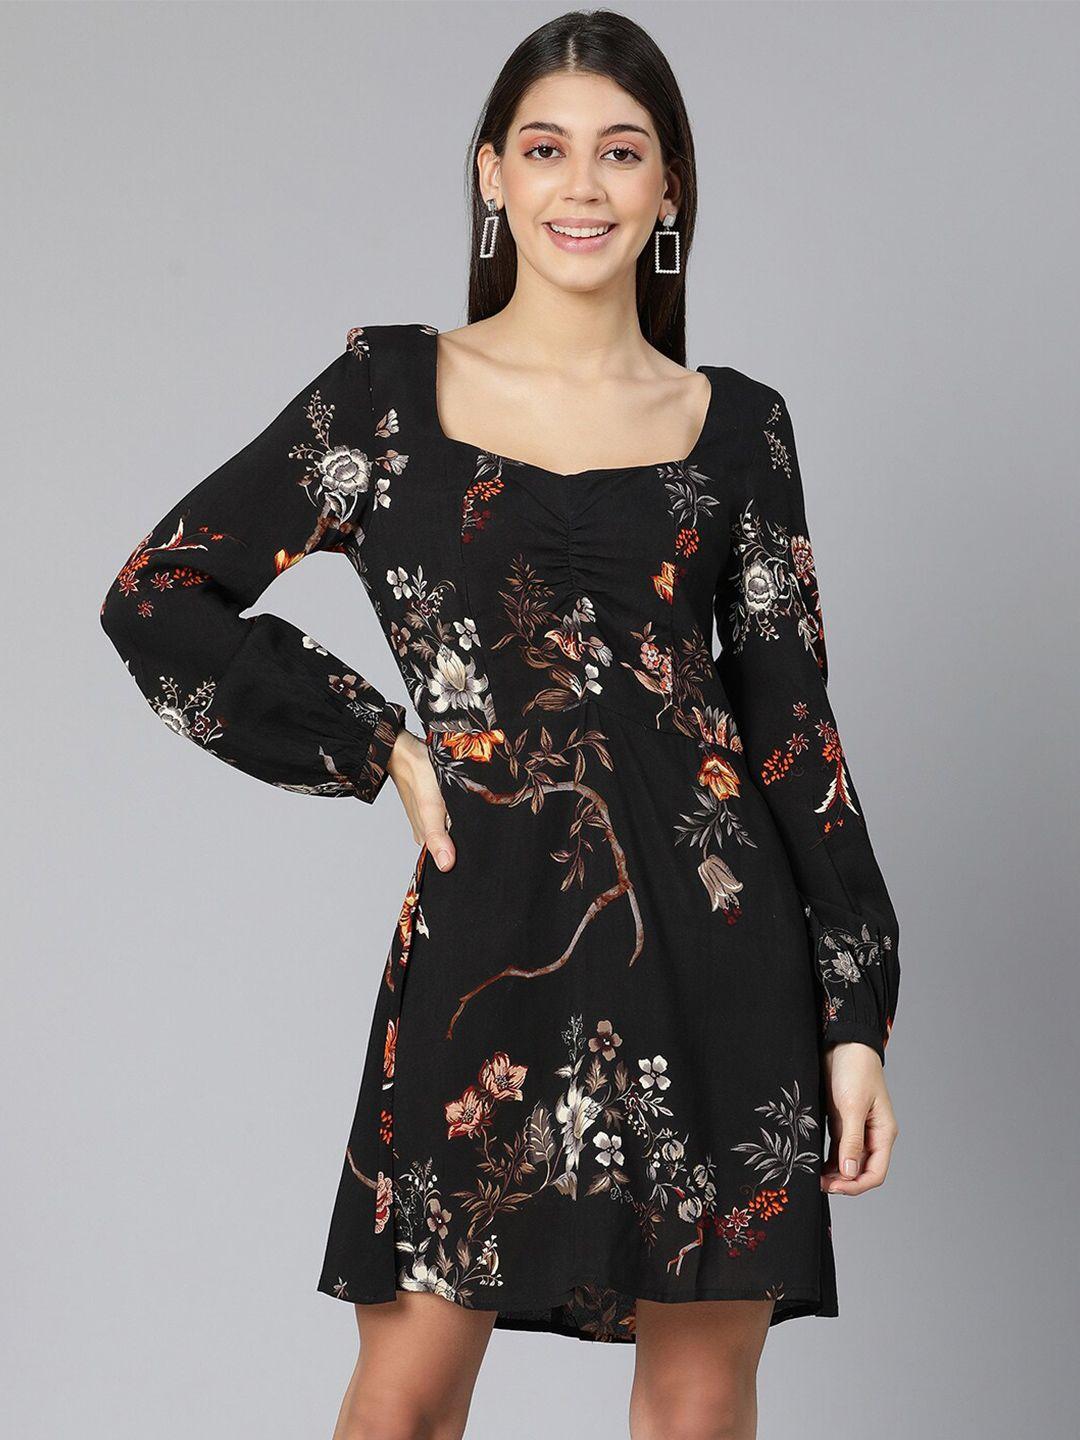 oxolloxo black floral crepe dress